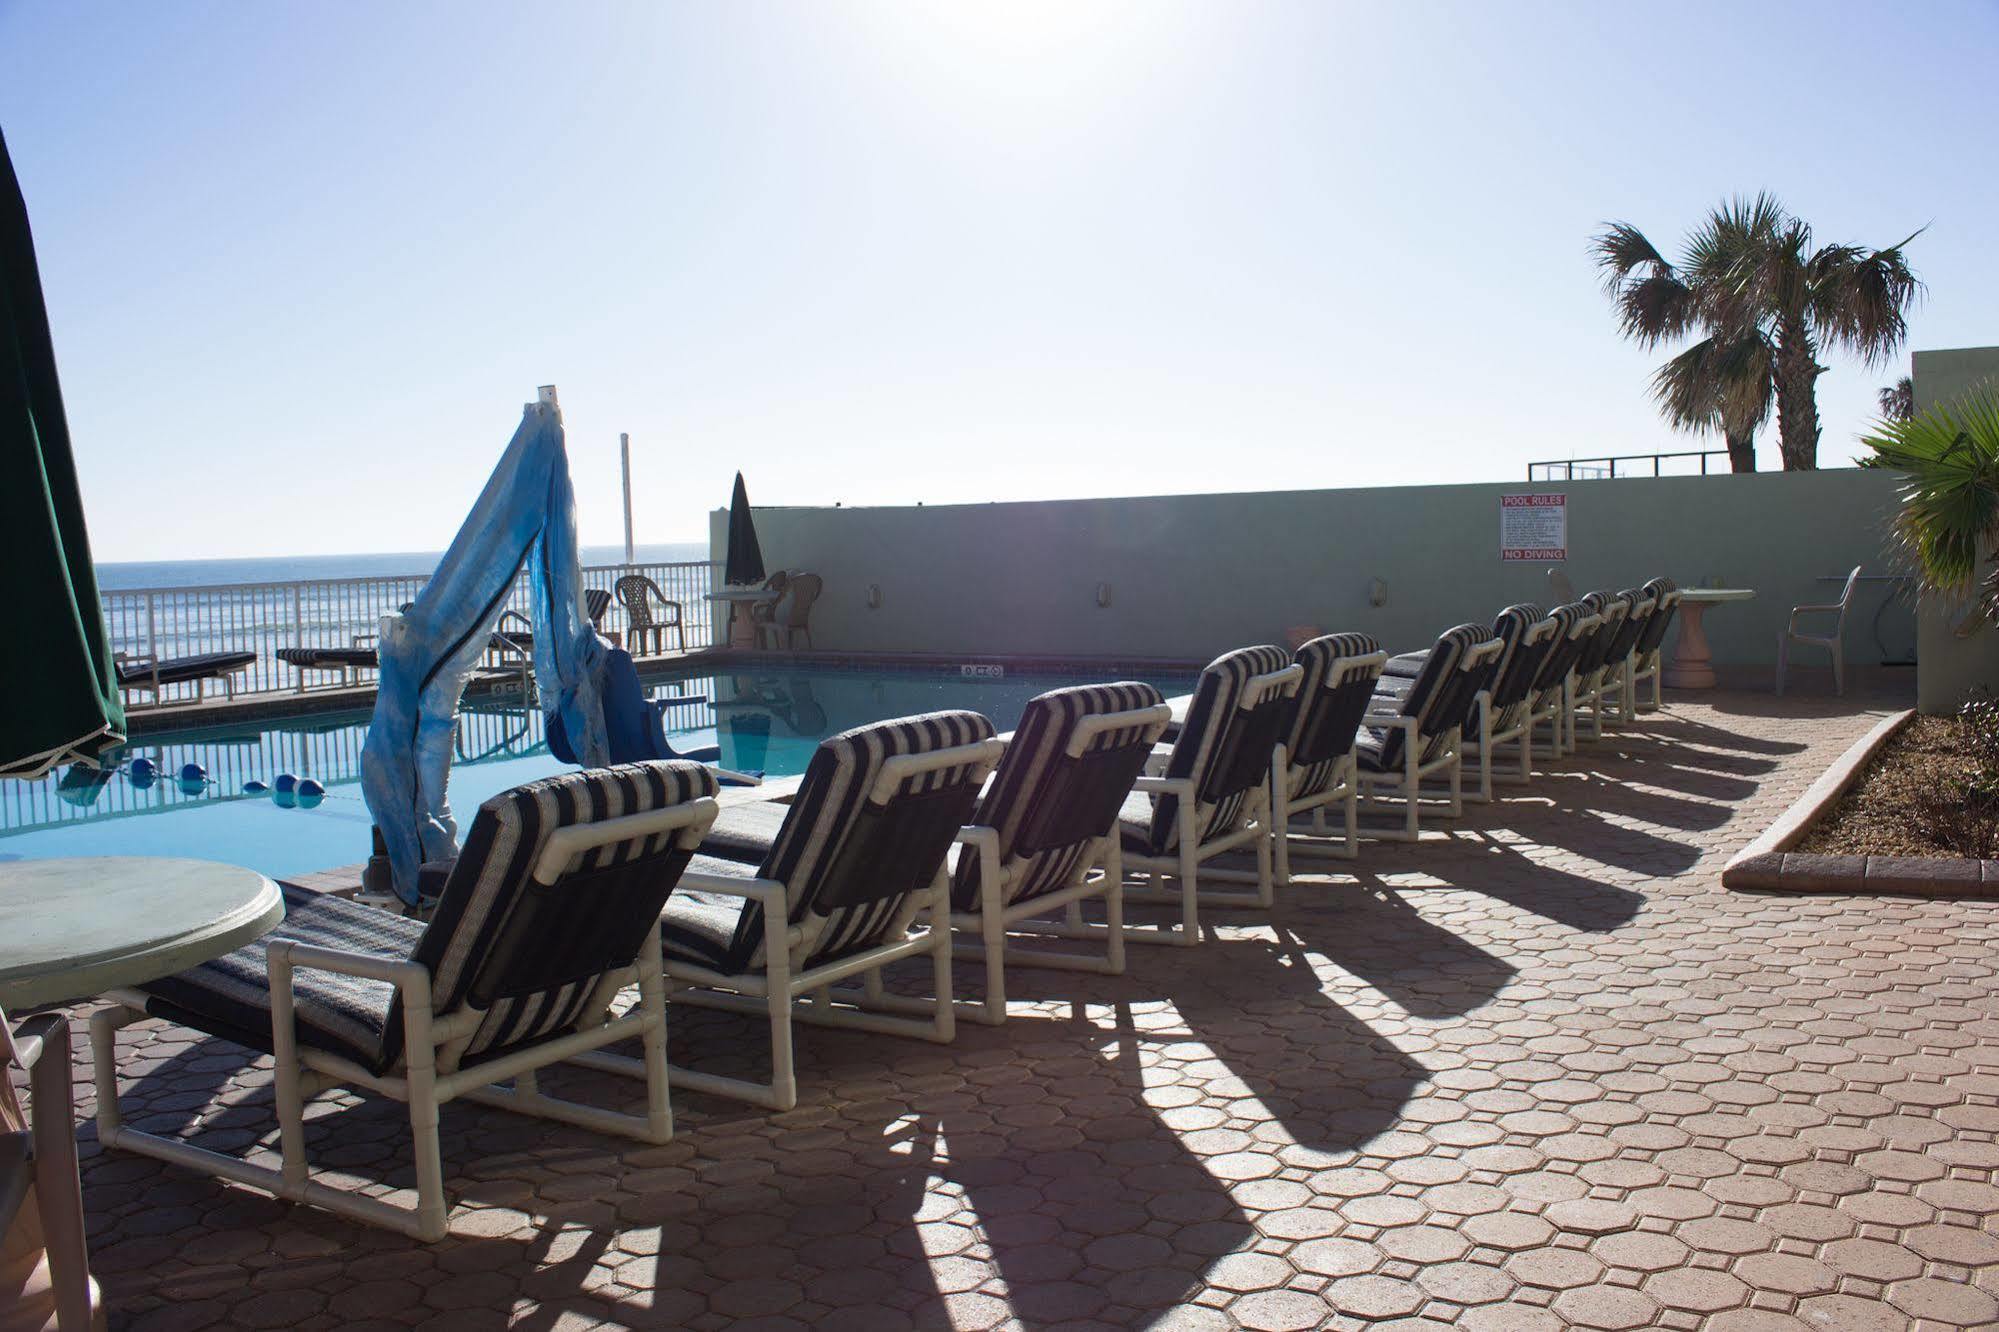 Atlantic Ocean Palm Inn Daytona Beach Exterior photo